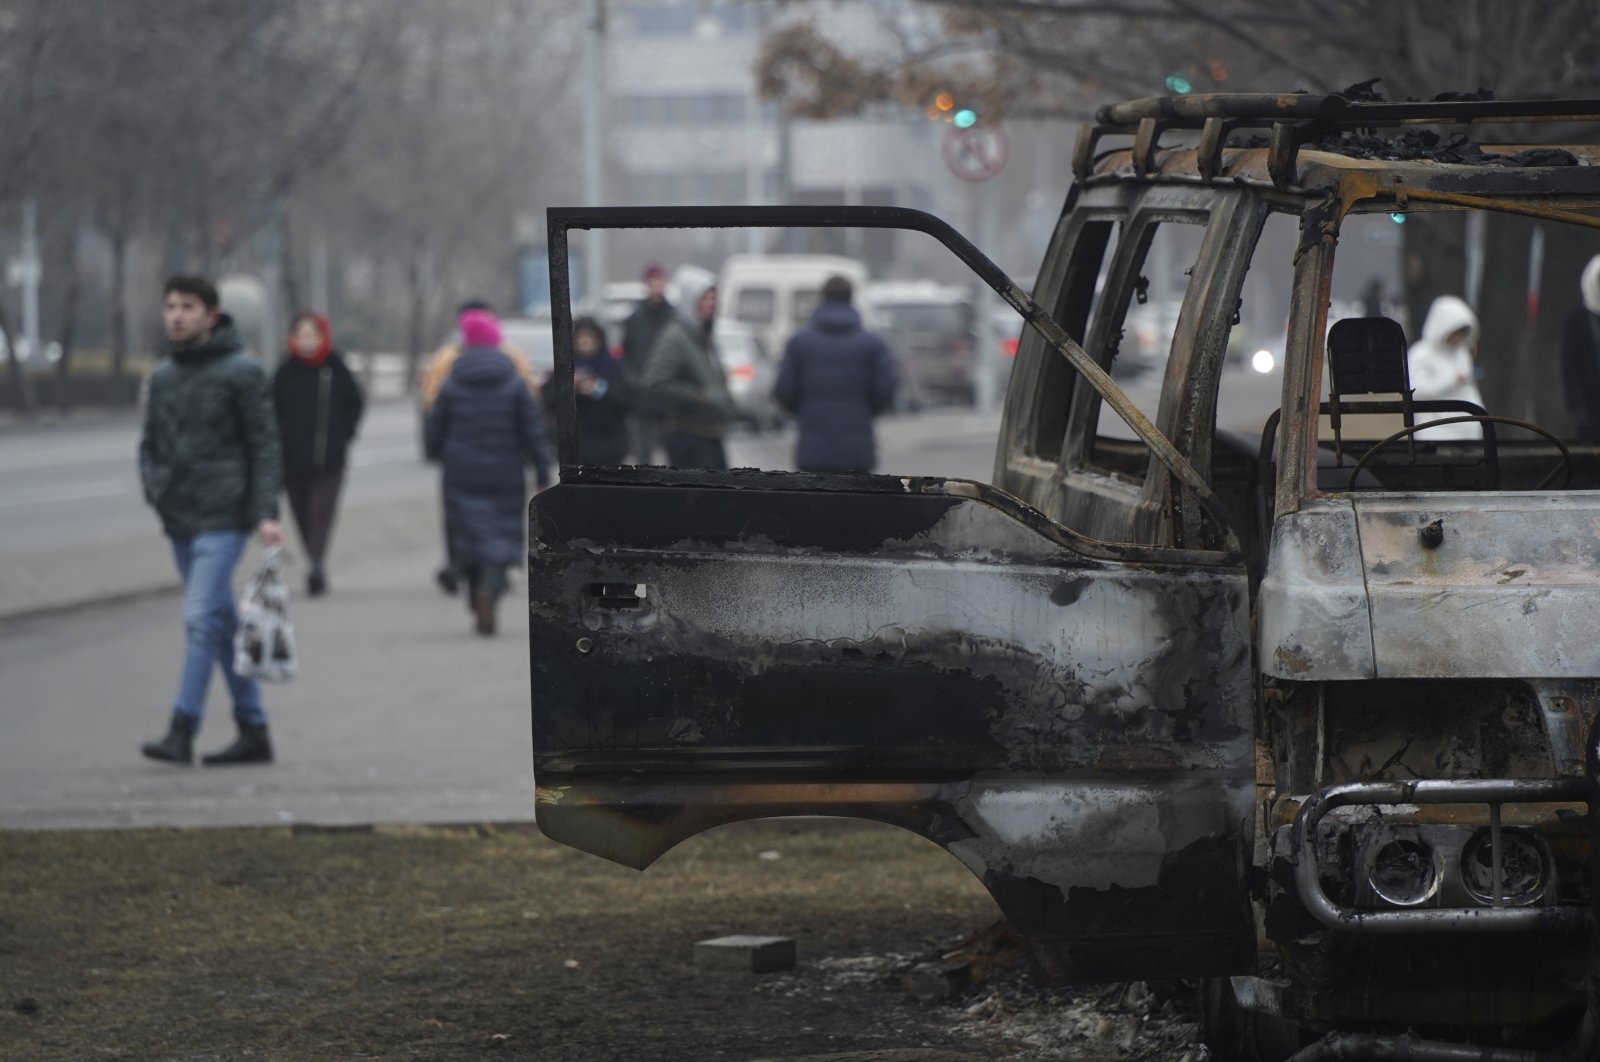 People walk past a bus burned during clashes in Almaty, Kazakhstan, Jan. 11, 2022. (Vladimir Tretyakov/NUR.KZ via AP)